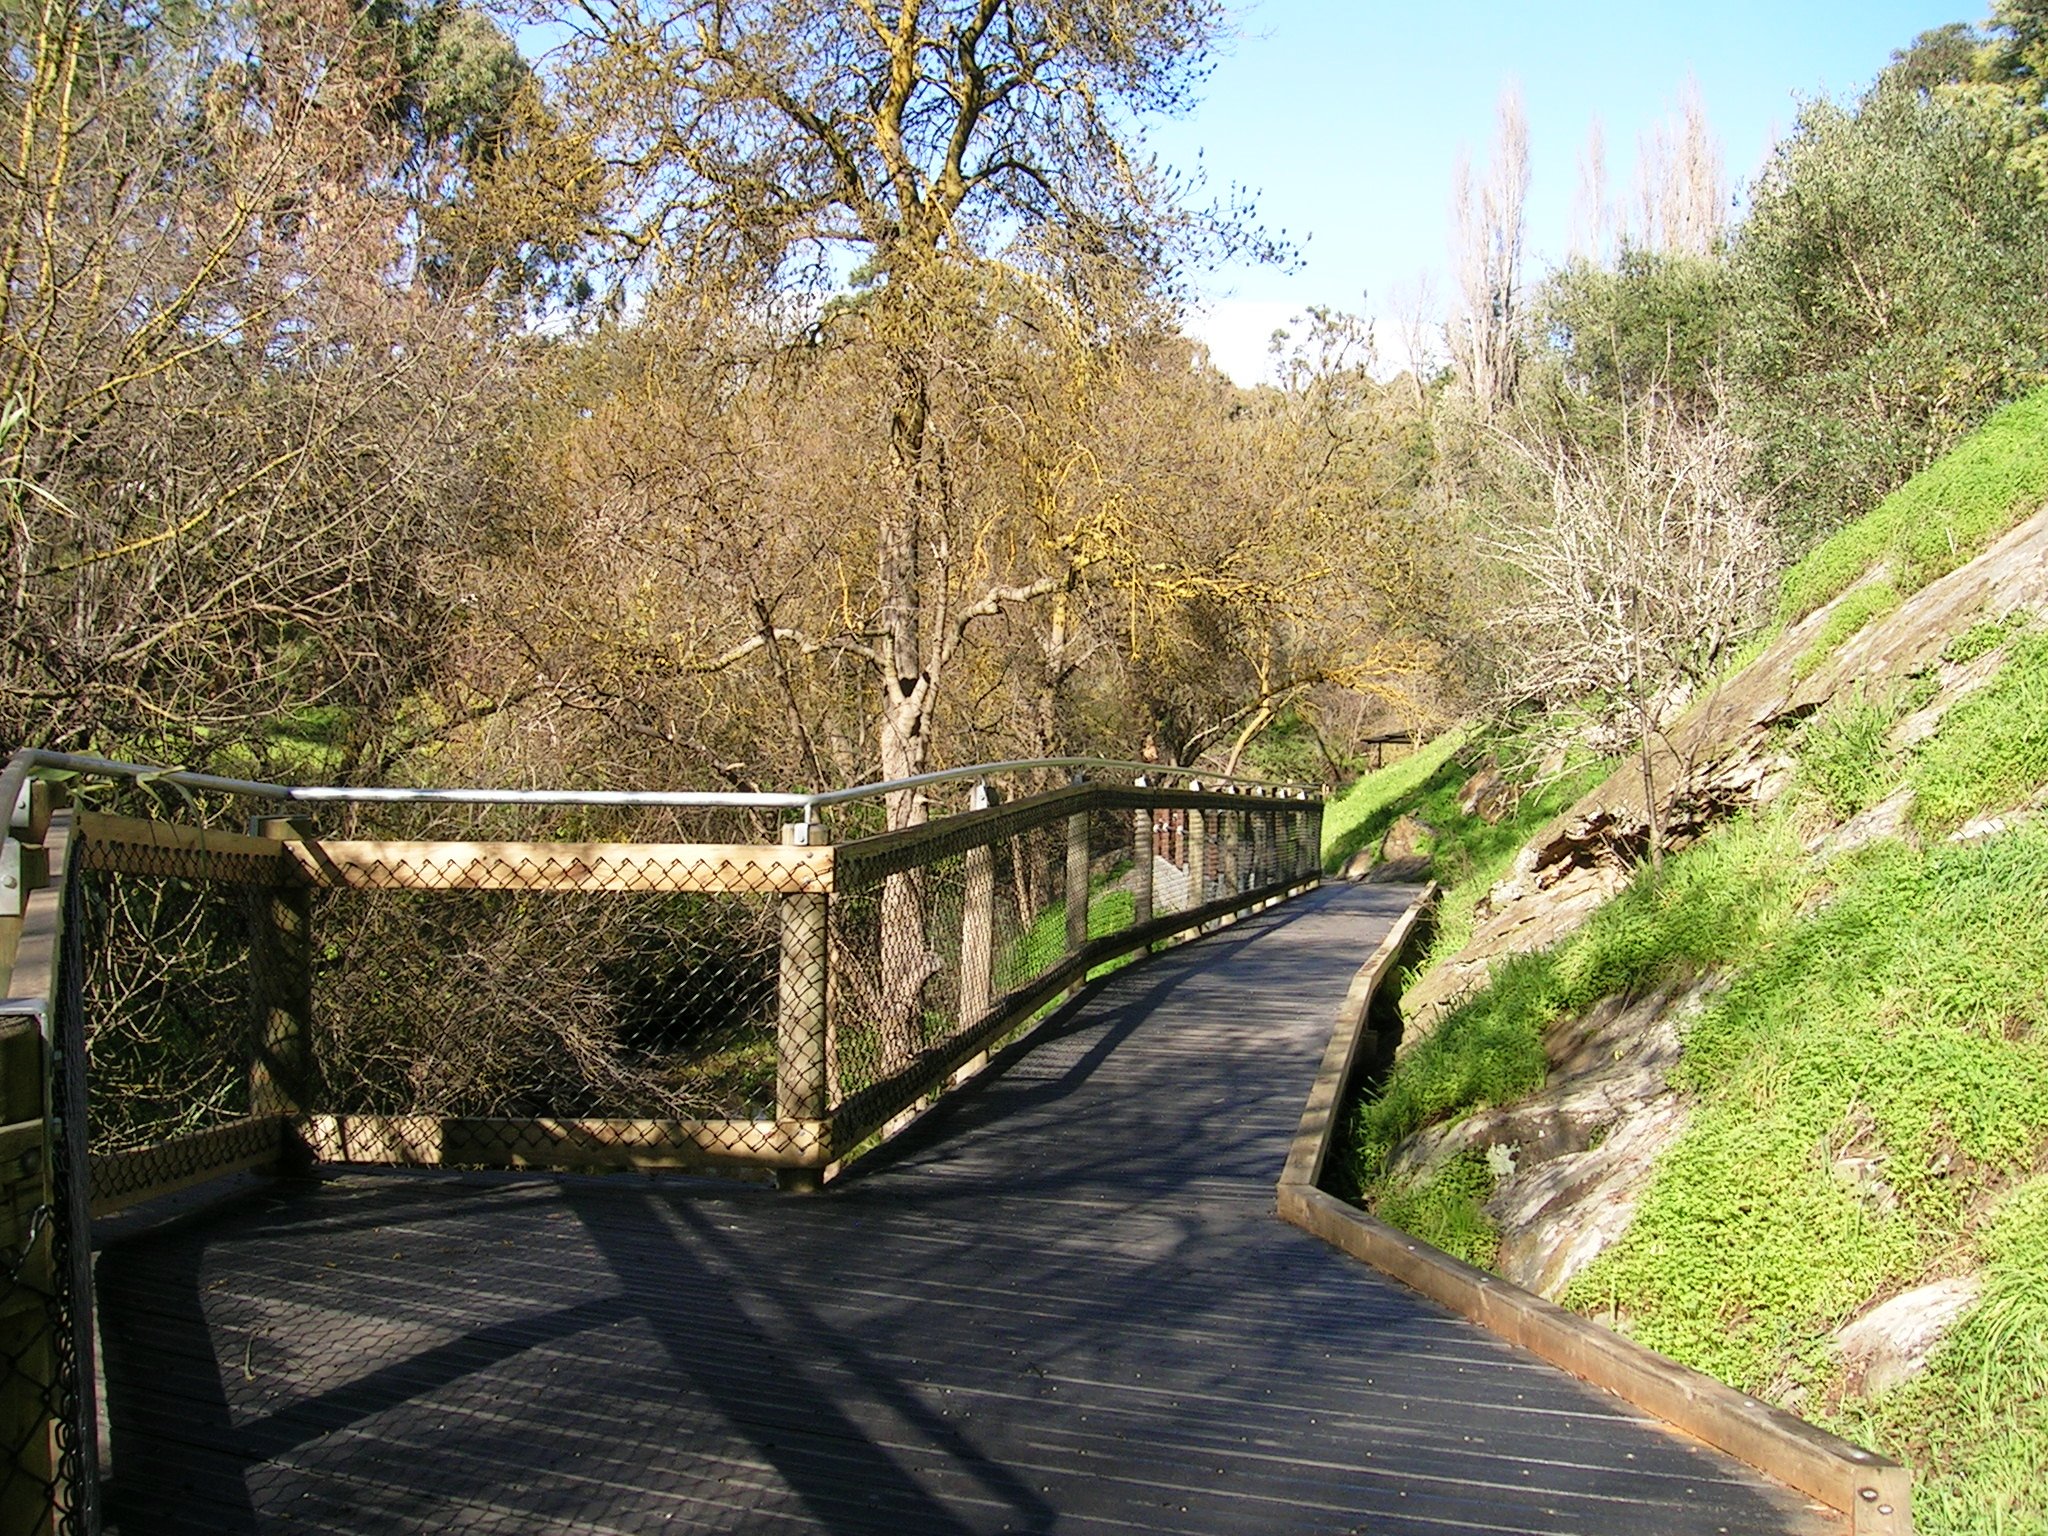 Sturt River Linear Trail and Deck